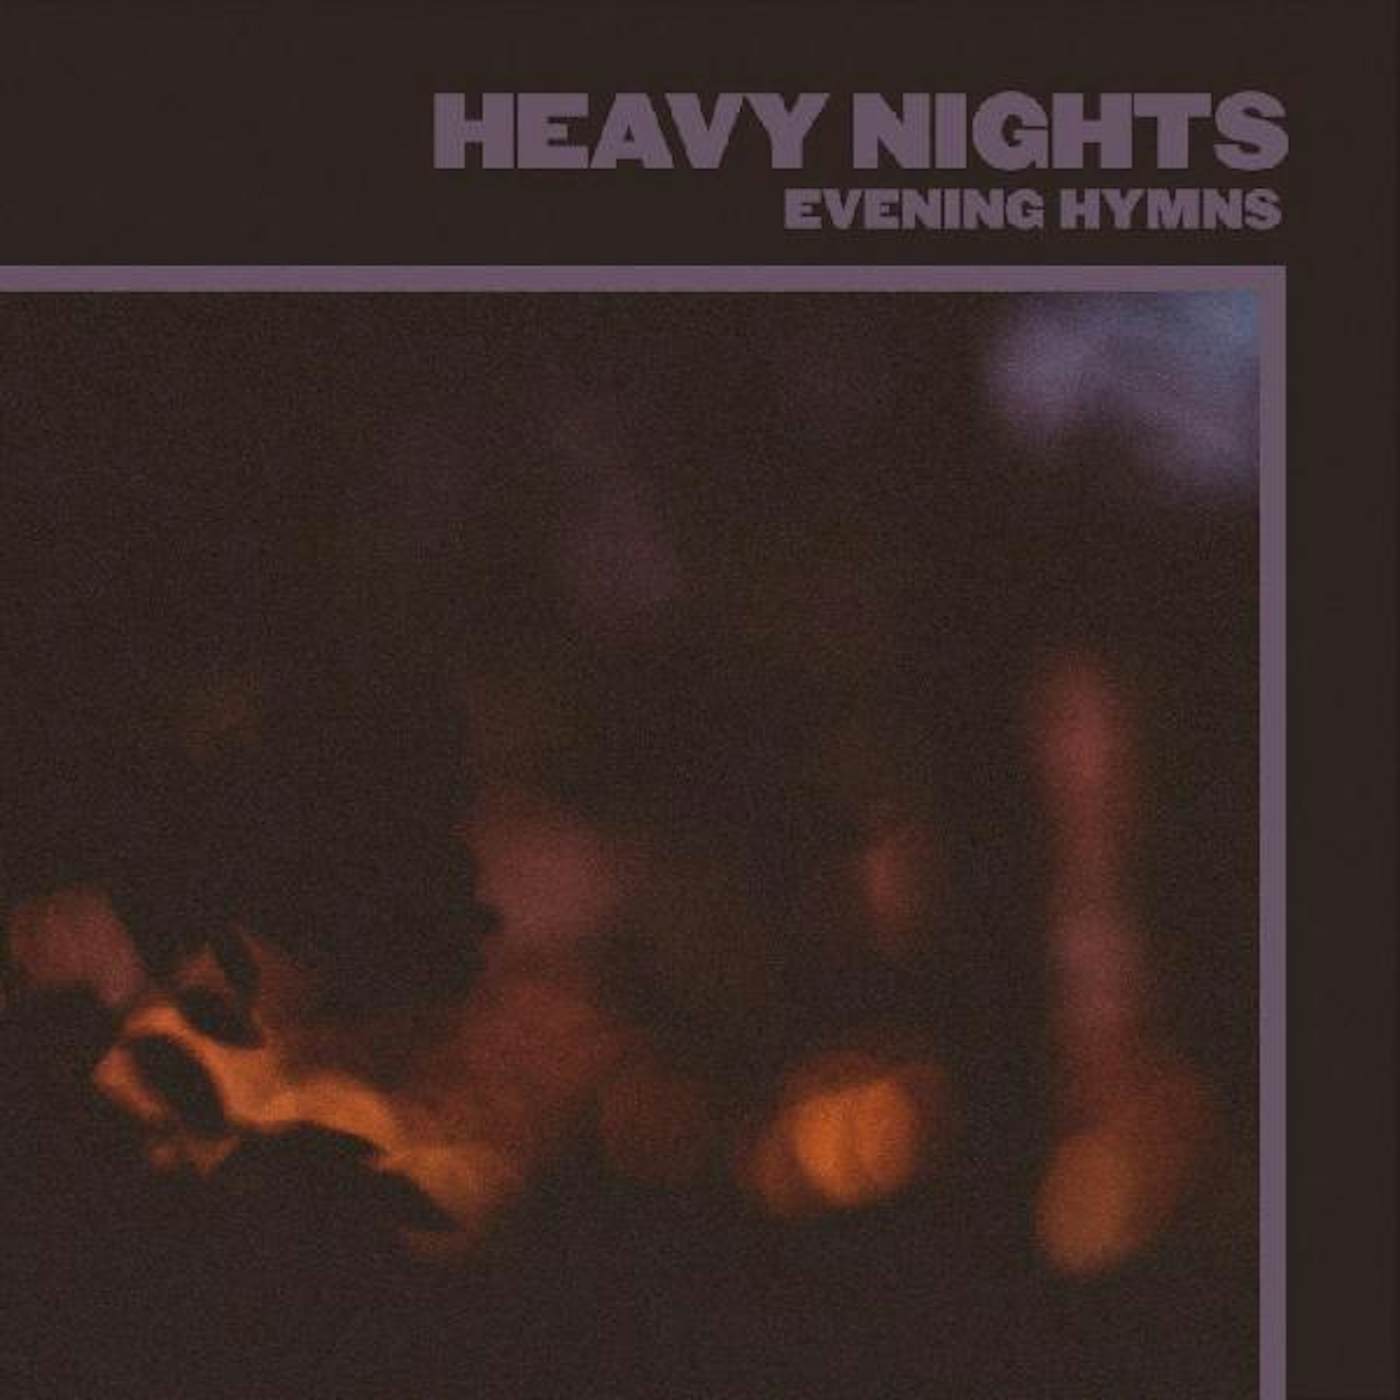 Evening Hymns Heavy Nights Vinyl Record